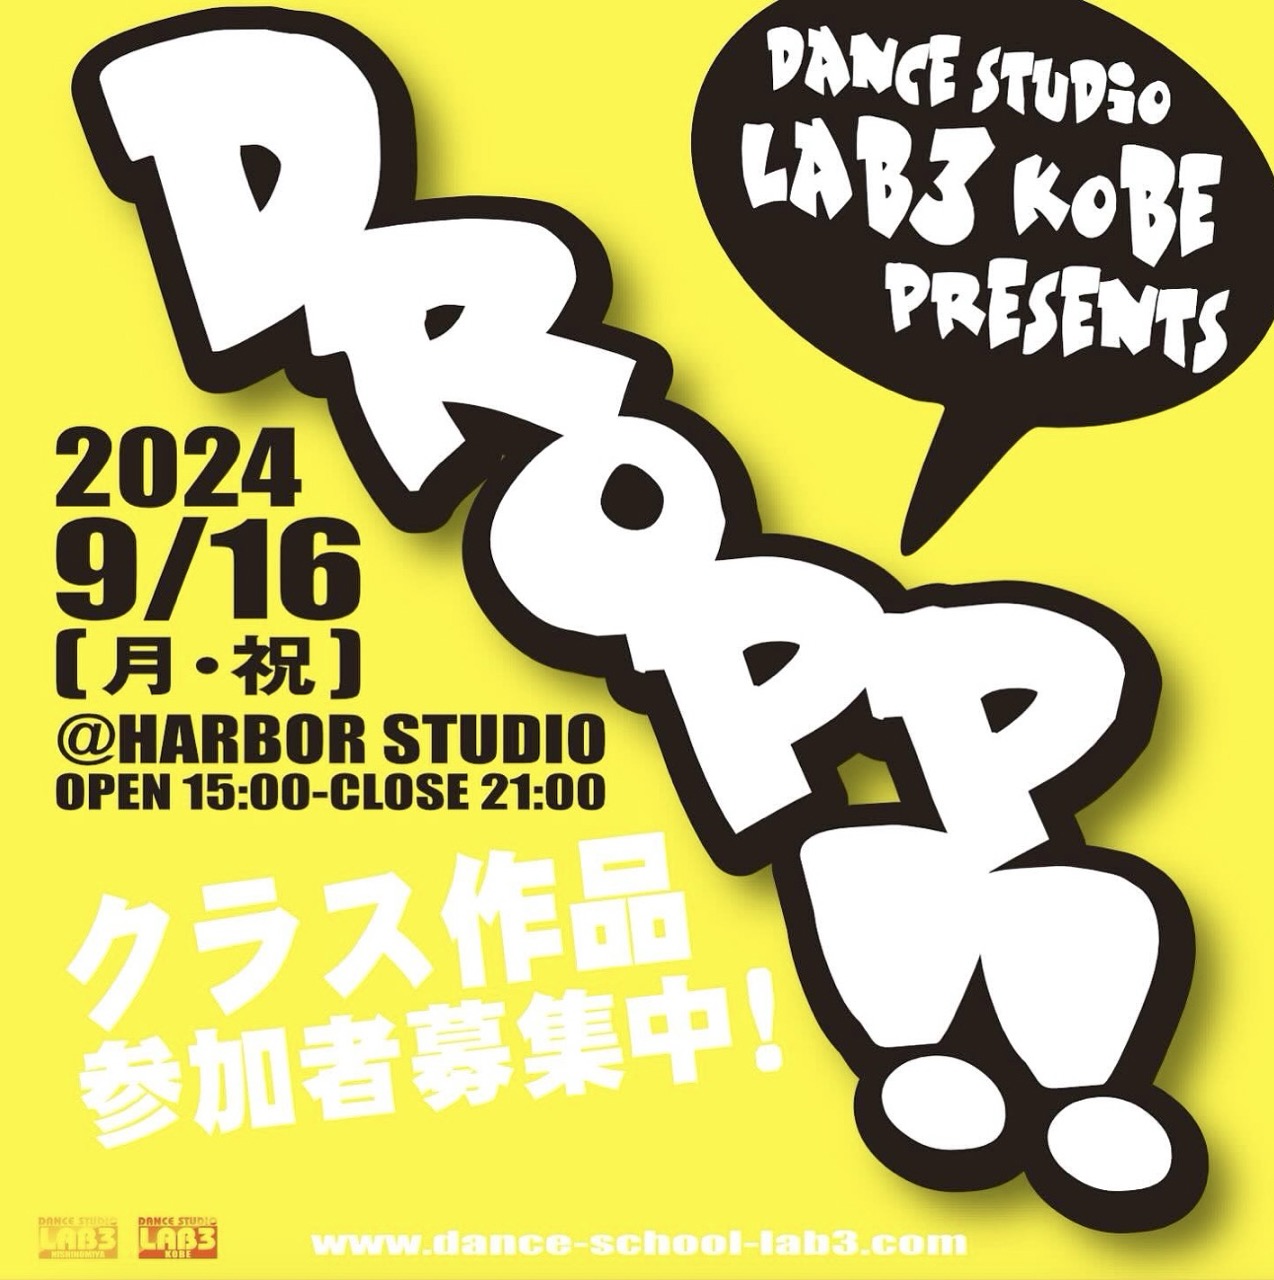 DANCE STUDIO LAB3 KOBE presents DROPP!!